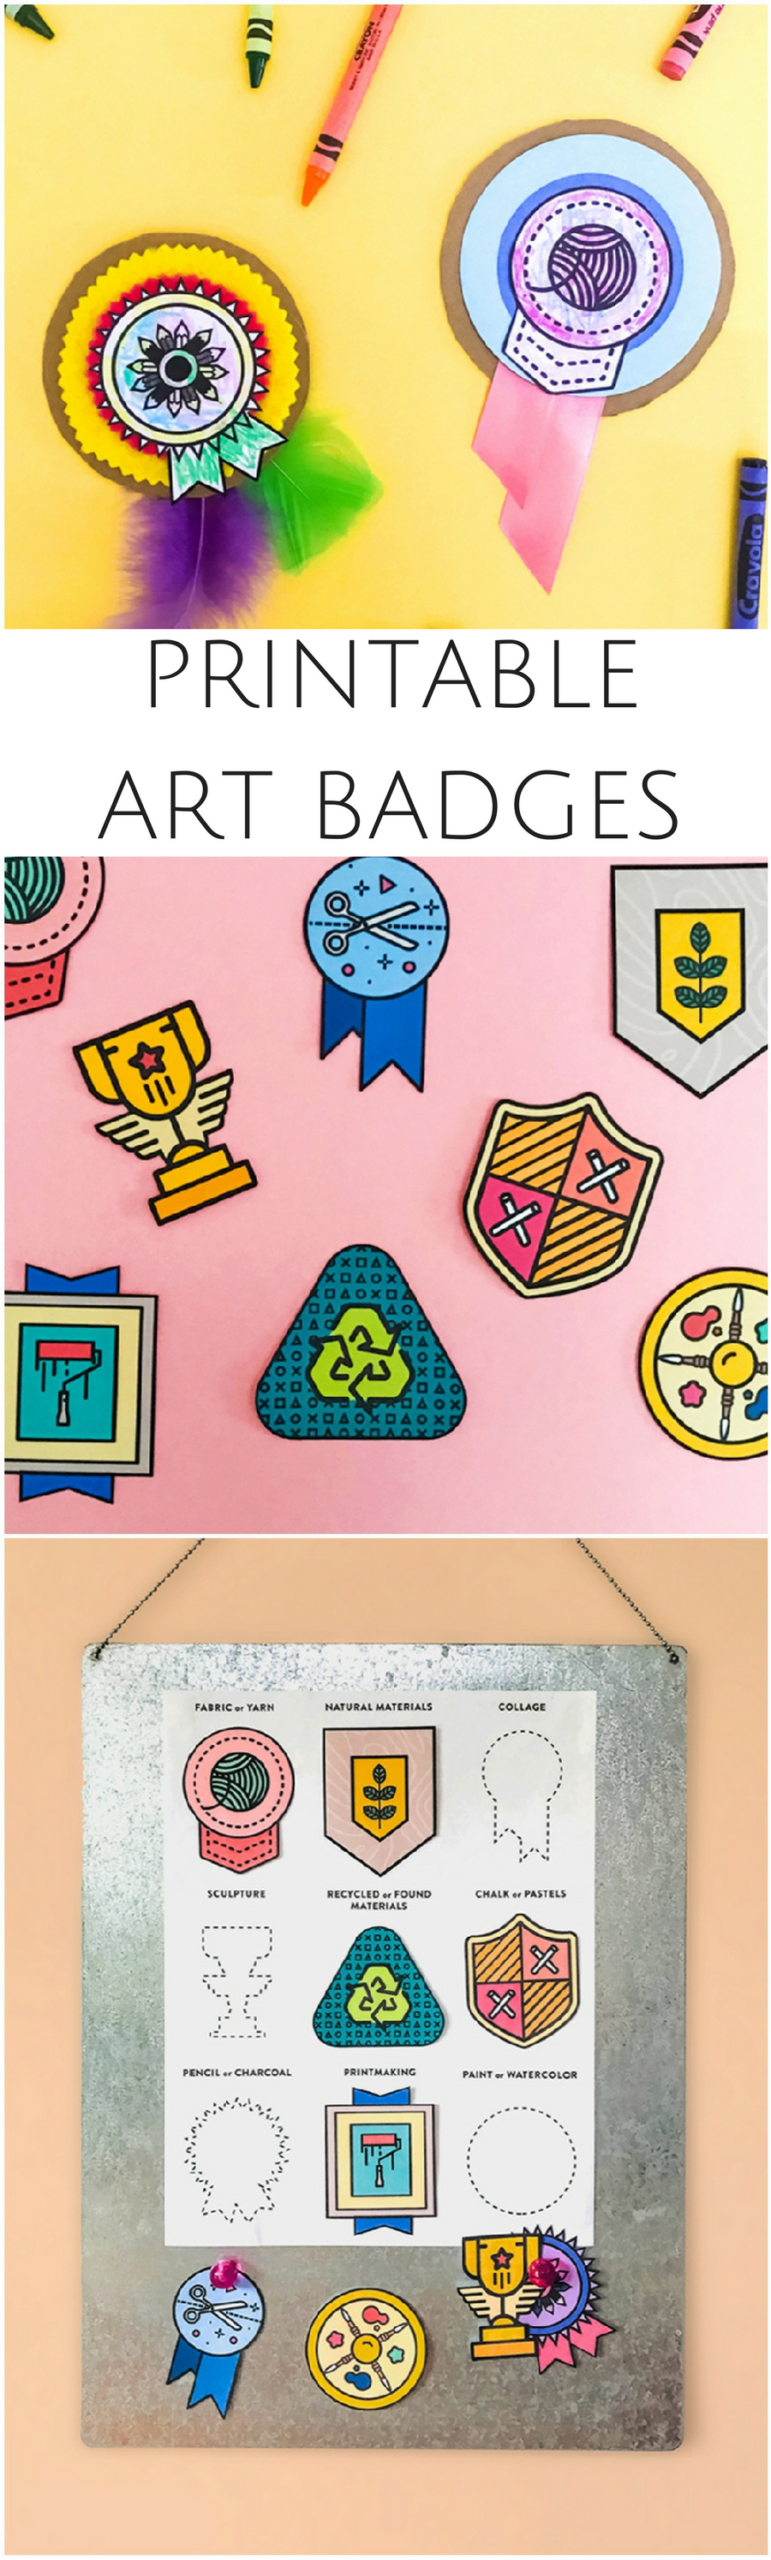 Free Printable Art Badges For Kids | Printable Crafts, Printables for Free Printable Badges